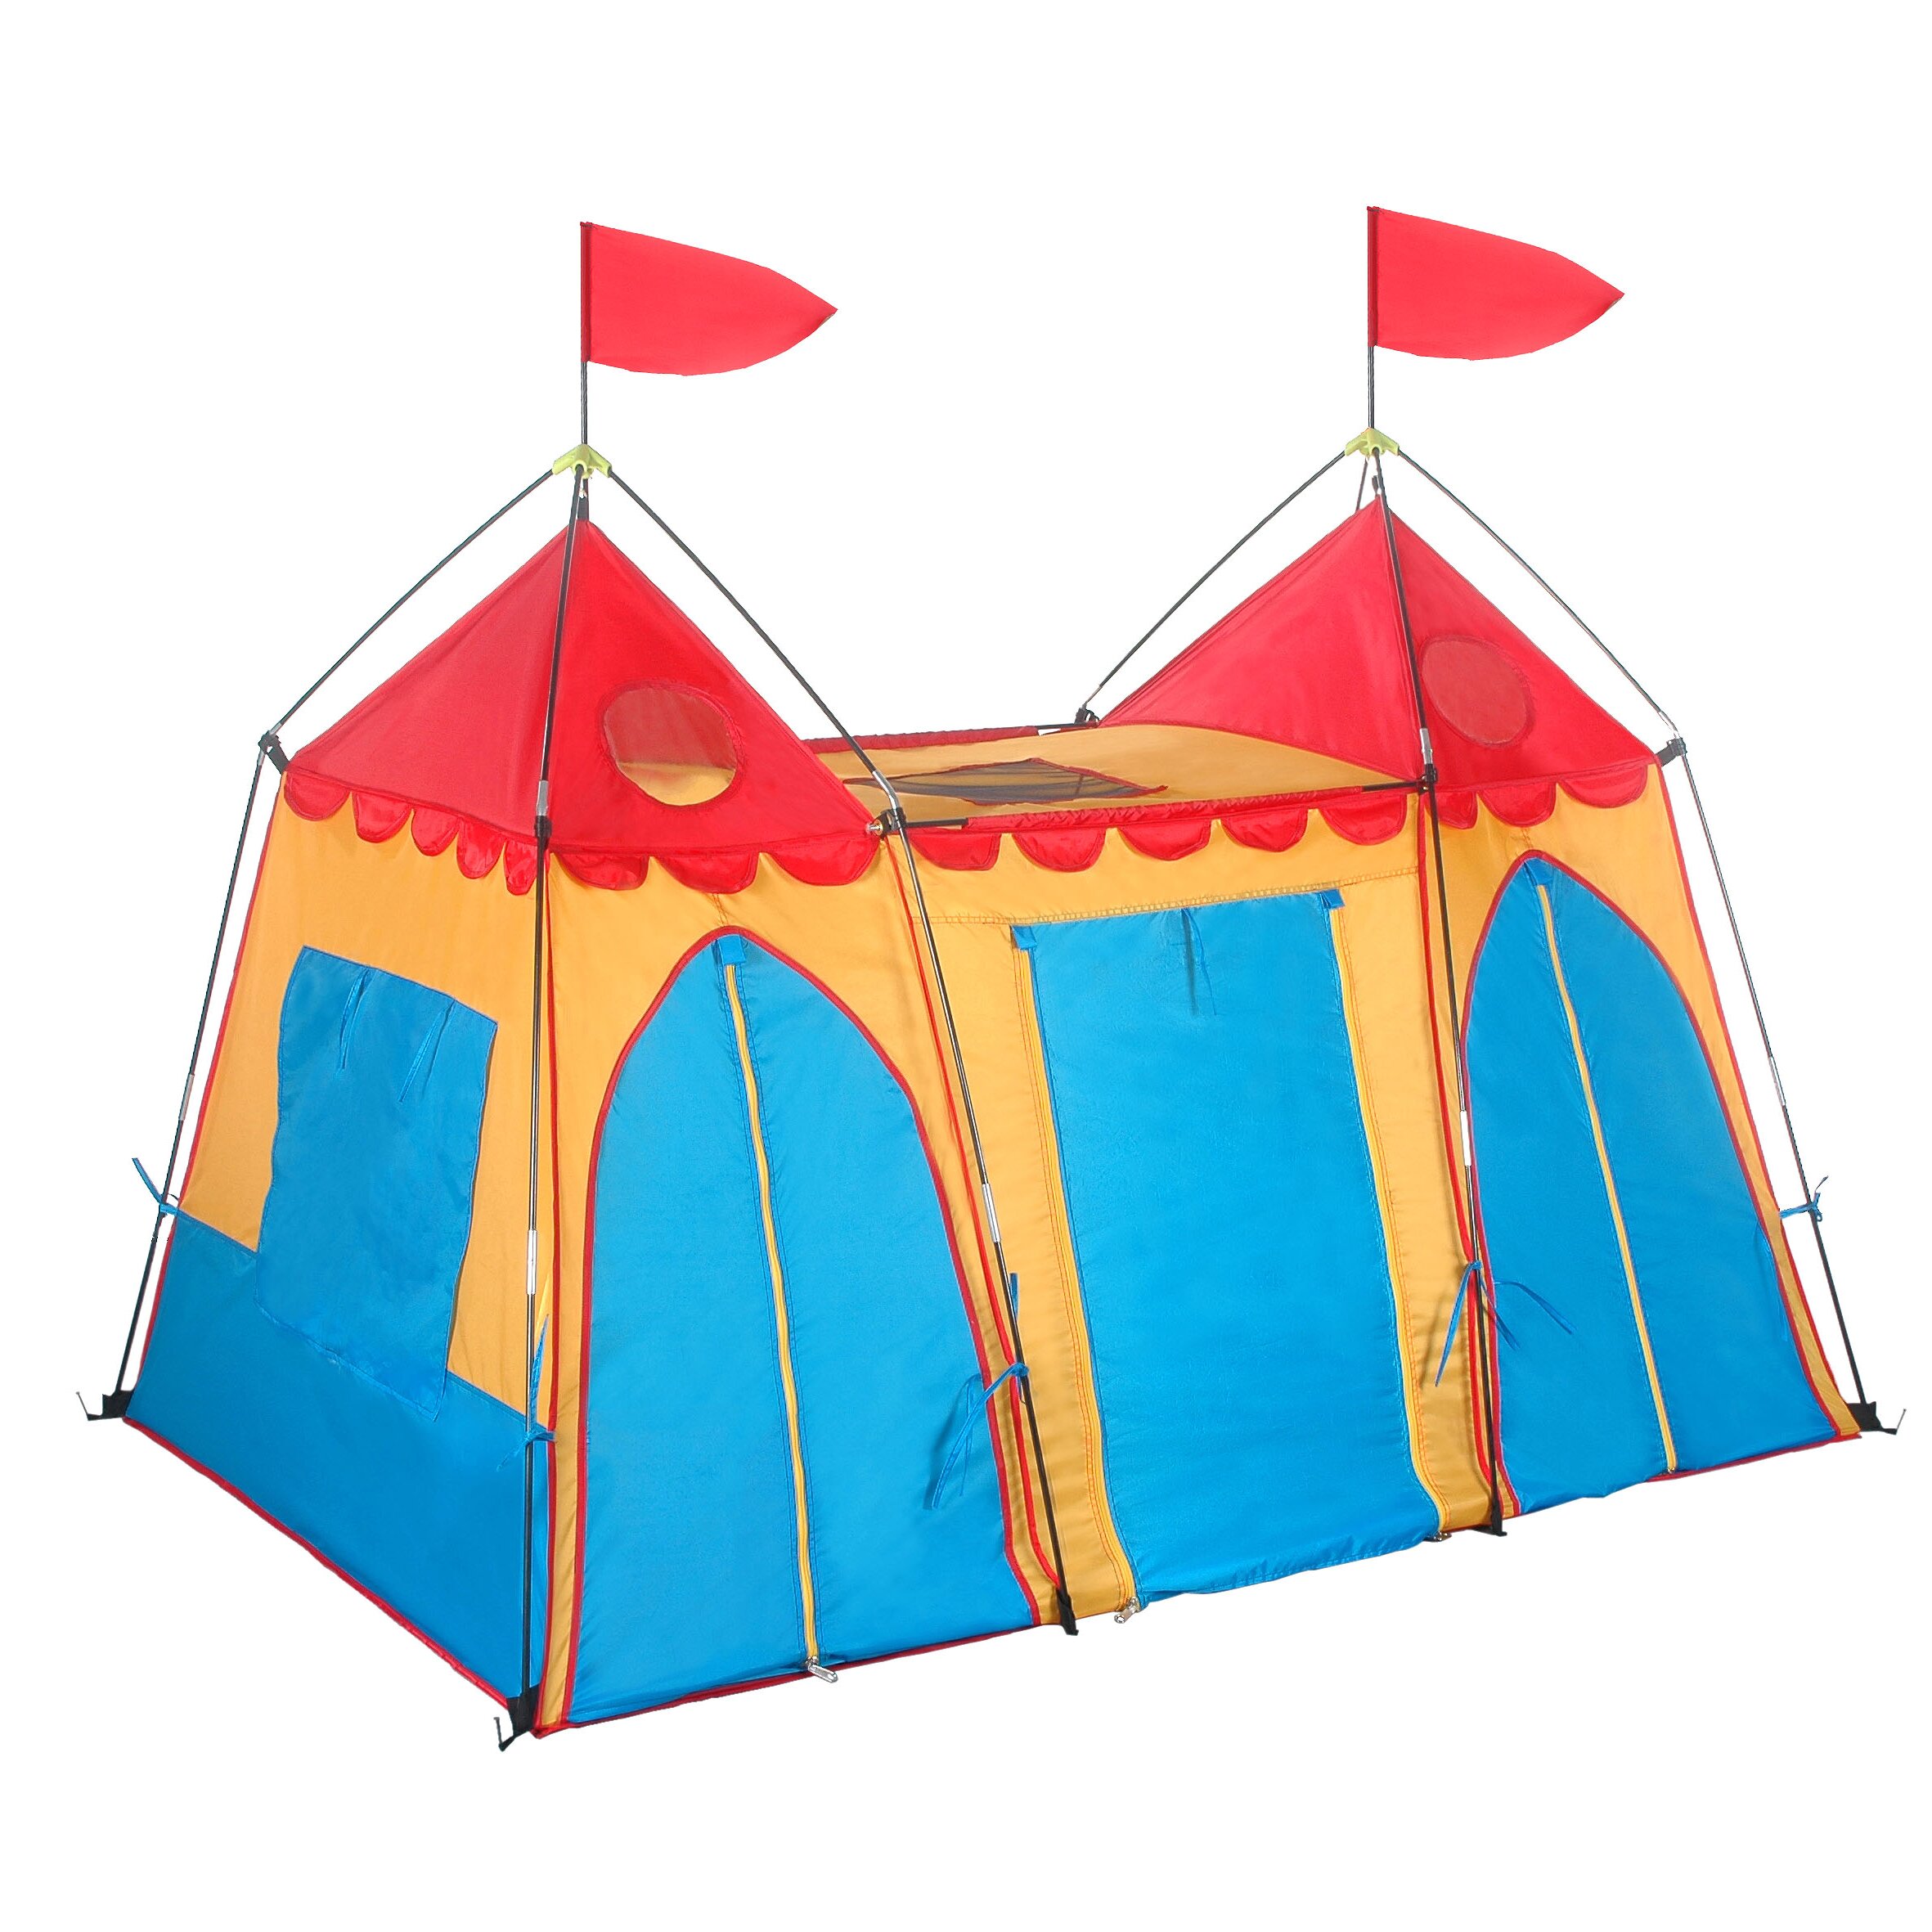 GigaTent Fantasy Palace Play Tent & Reviews | Wayfair